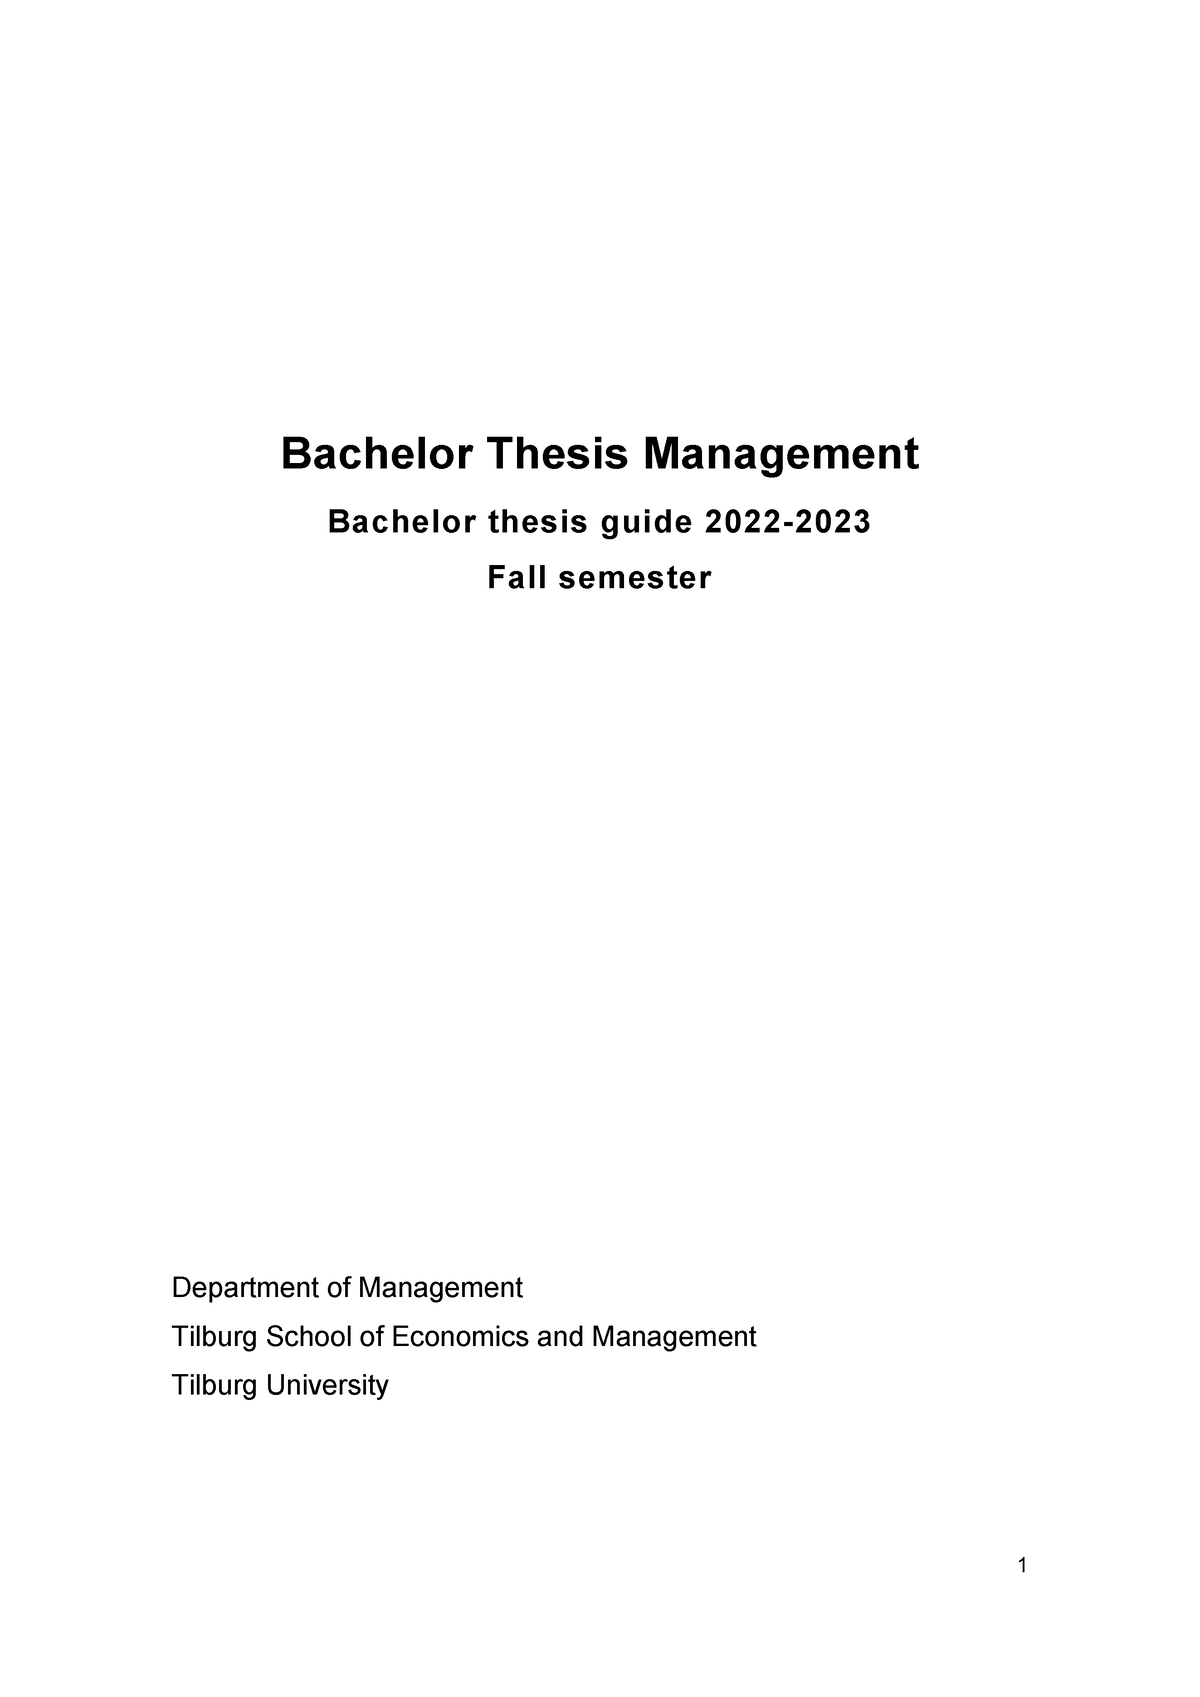 thesis course syllabus